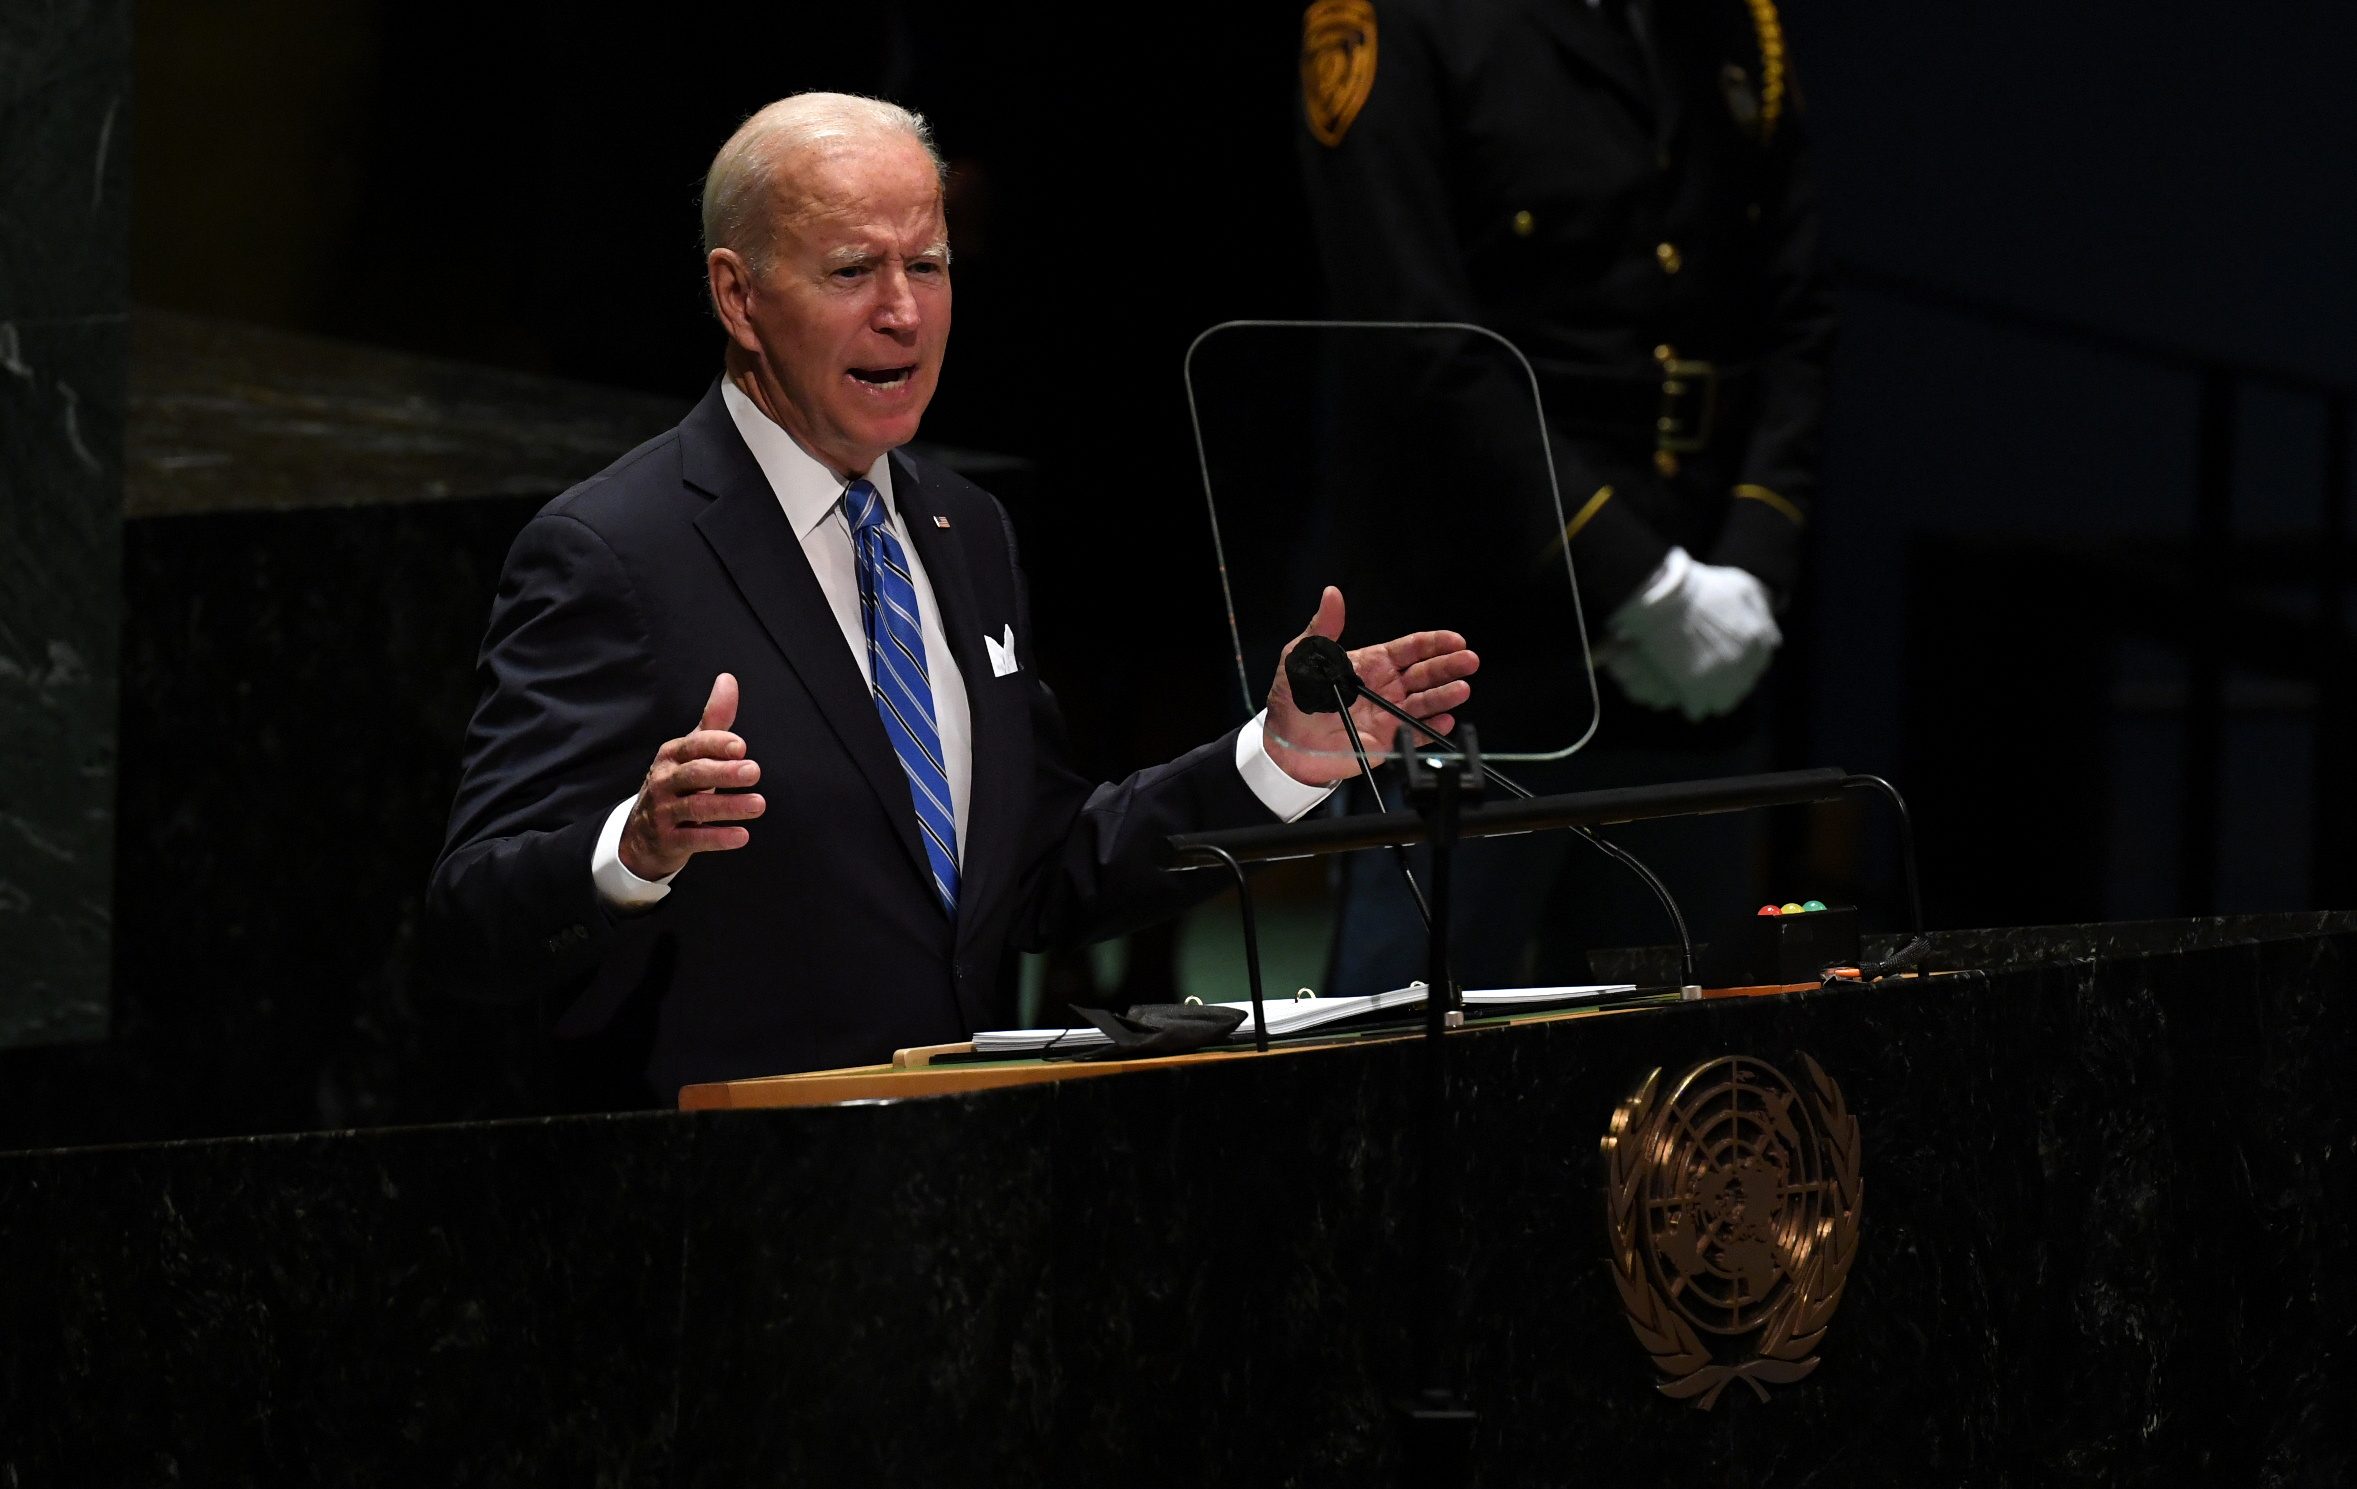 Amid tensions with China, Biden tells UN: US not seeking ‘new Cold War’